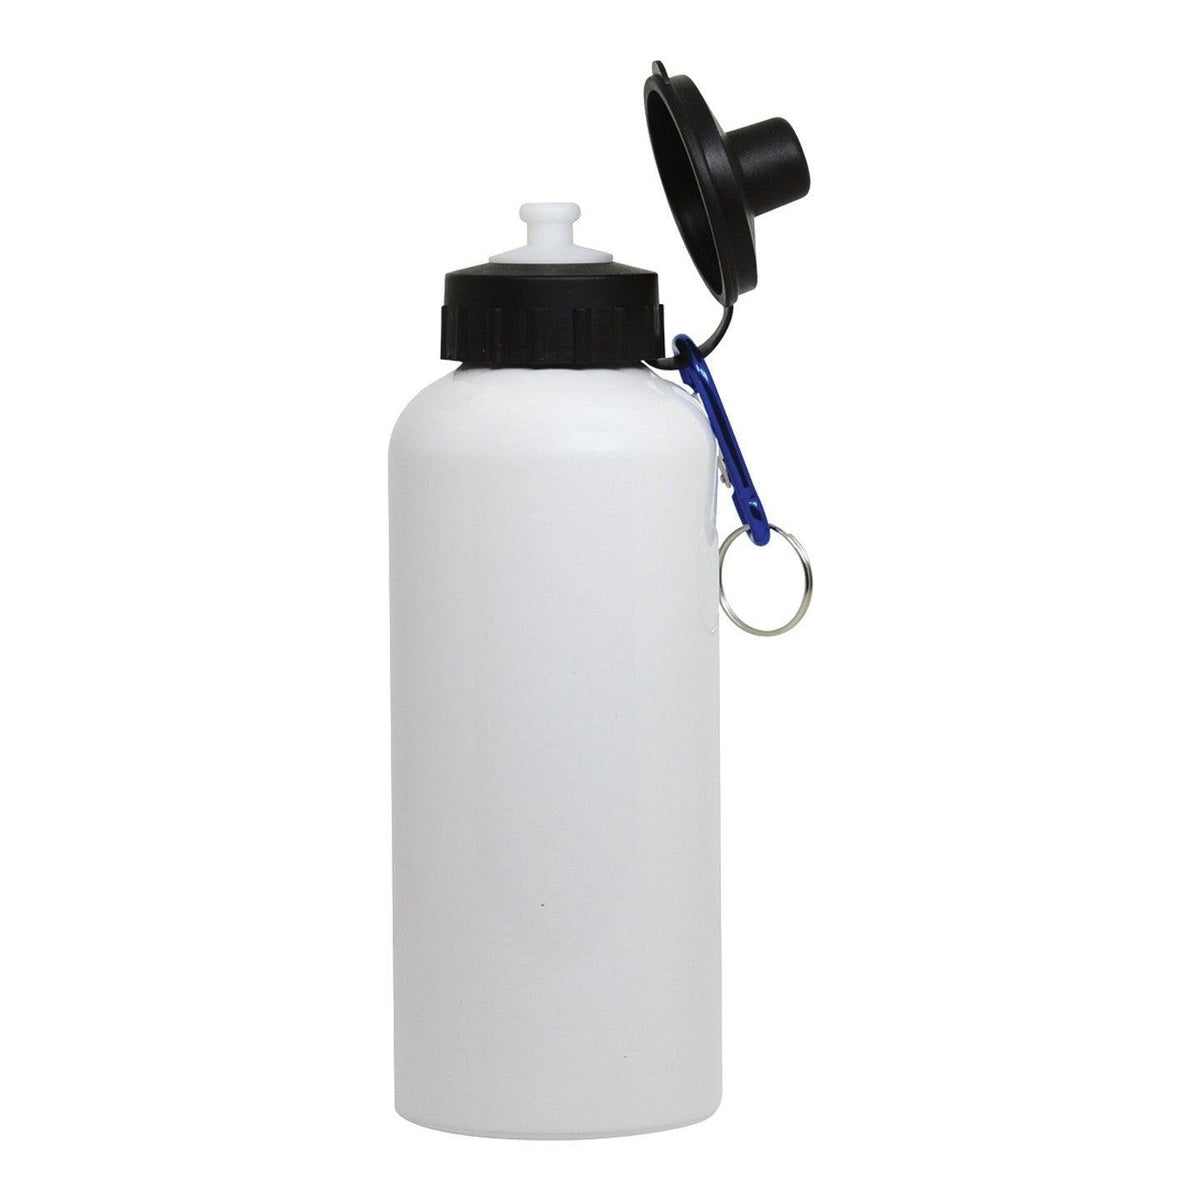 600ml Stainless Steel Straw Top Water Bottle (White) (MUG-SS20W